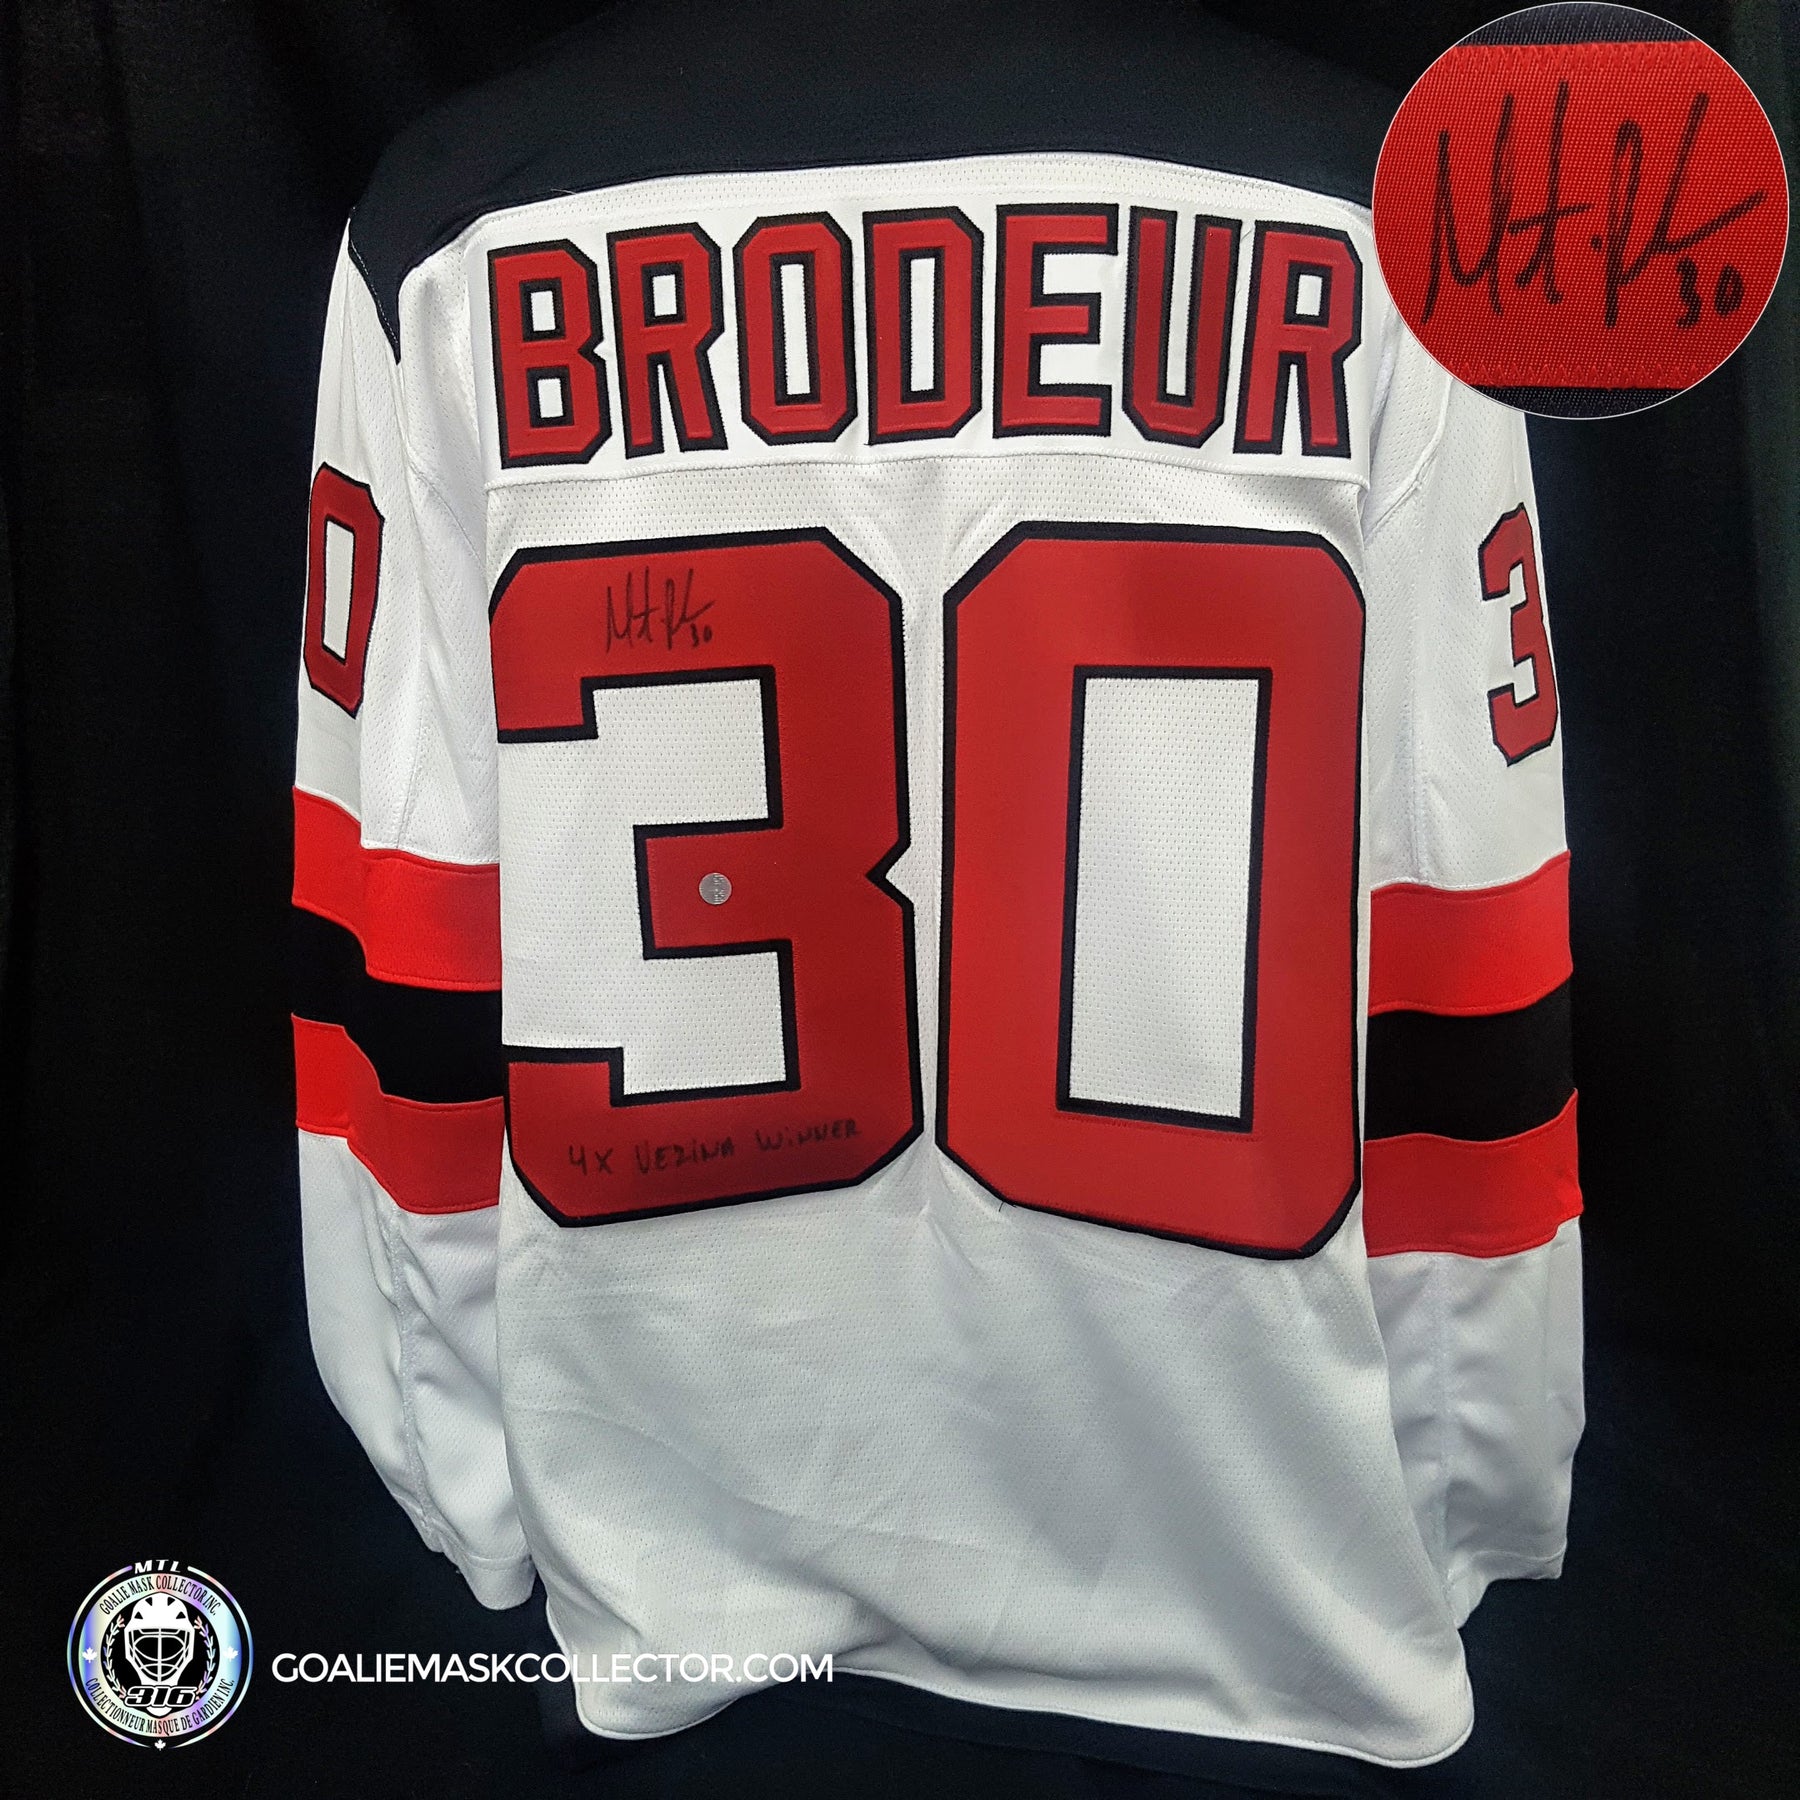 Martin Brodeur New Jersey Devils Autographed Fanatics Authentic